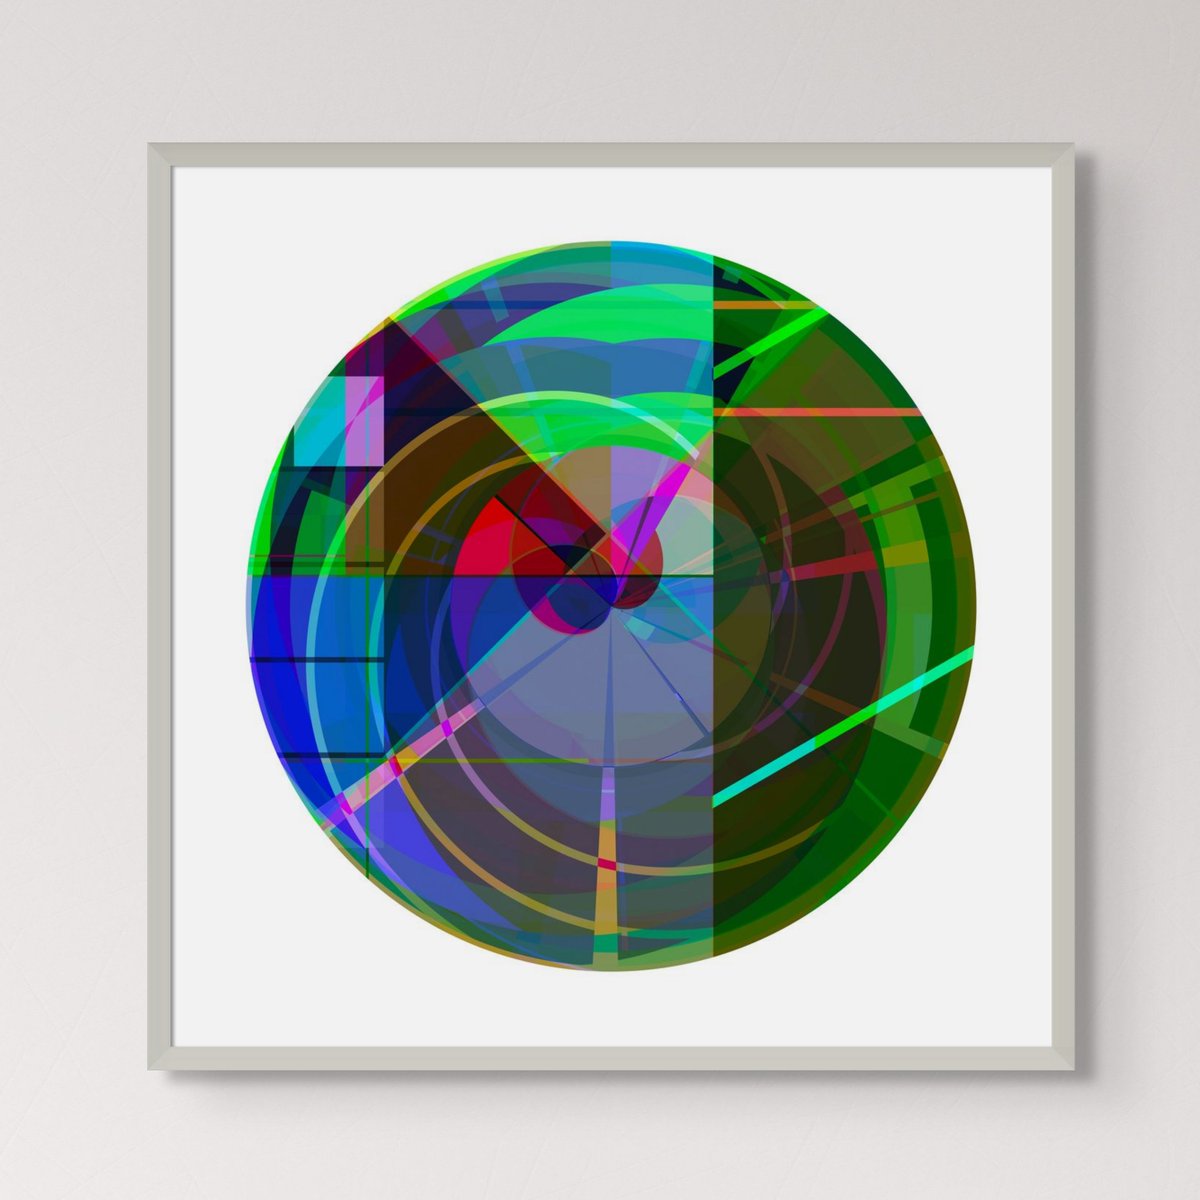 'Bridges Through The Eye'
#163, part of Series 3

#art
#artwork
#artoftheday
#abstractart
#geometric
#geometricart
#geometry
#layered
#colorful
#modernart
#color
#artist
#fineart
#square
#squareart
#circle
#lines
#todaysartreport
#generativeart
#contemporaryart
#artcollector